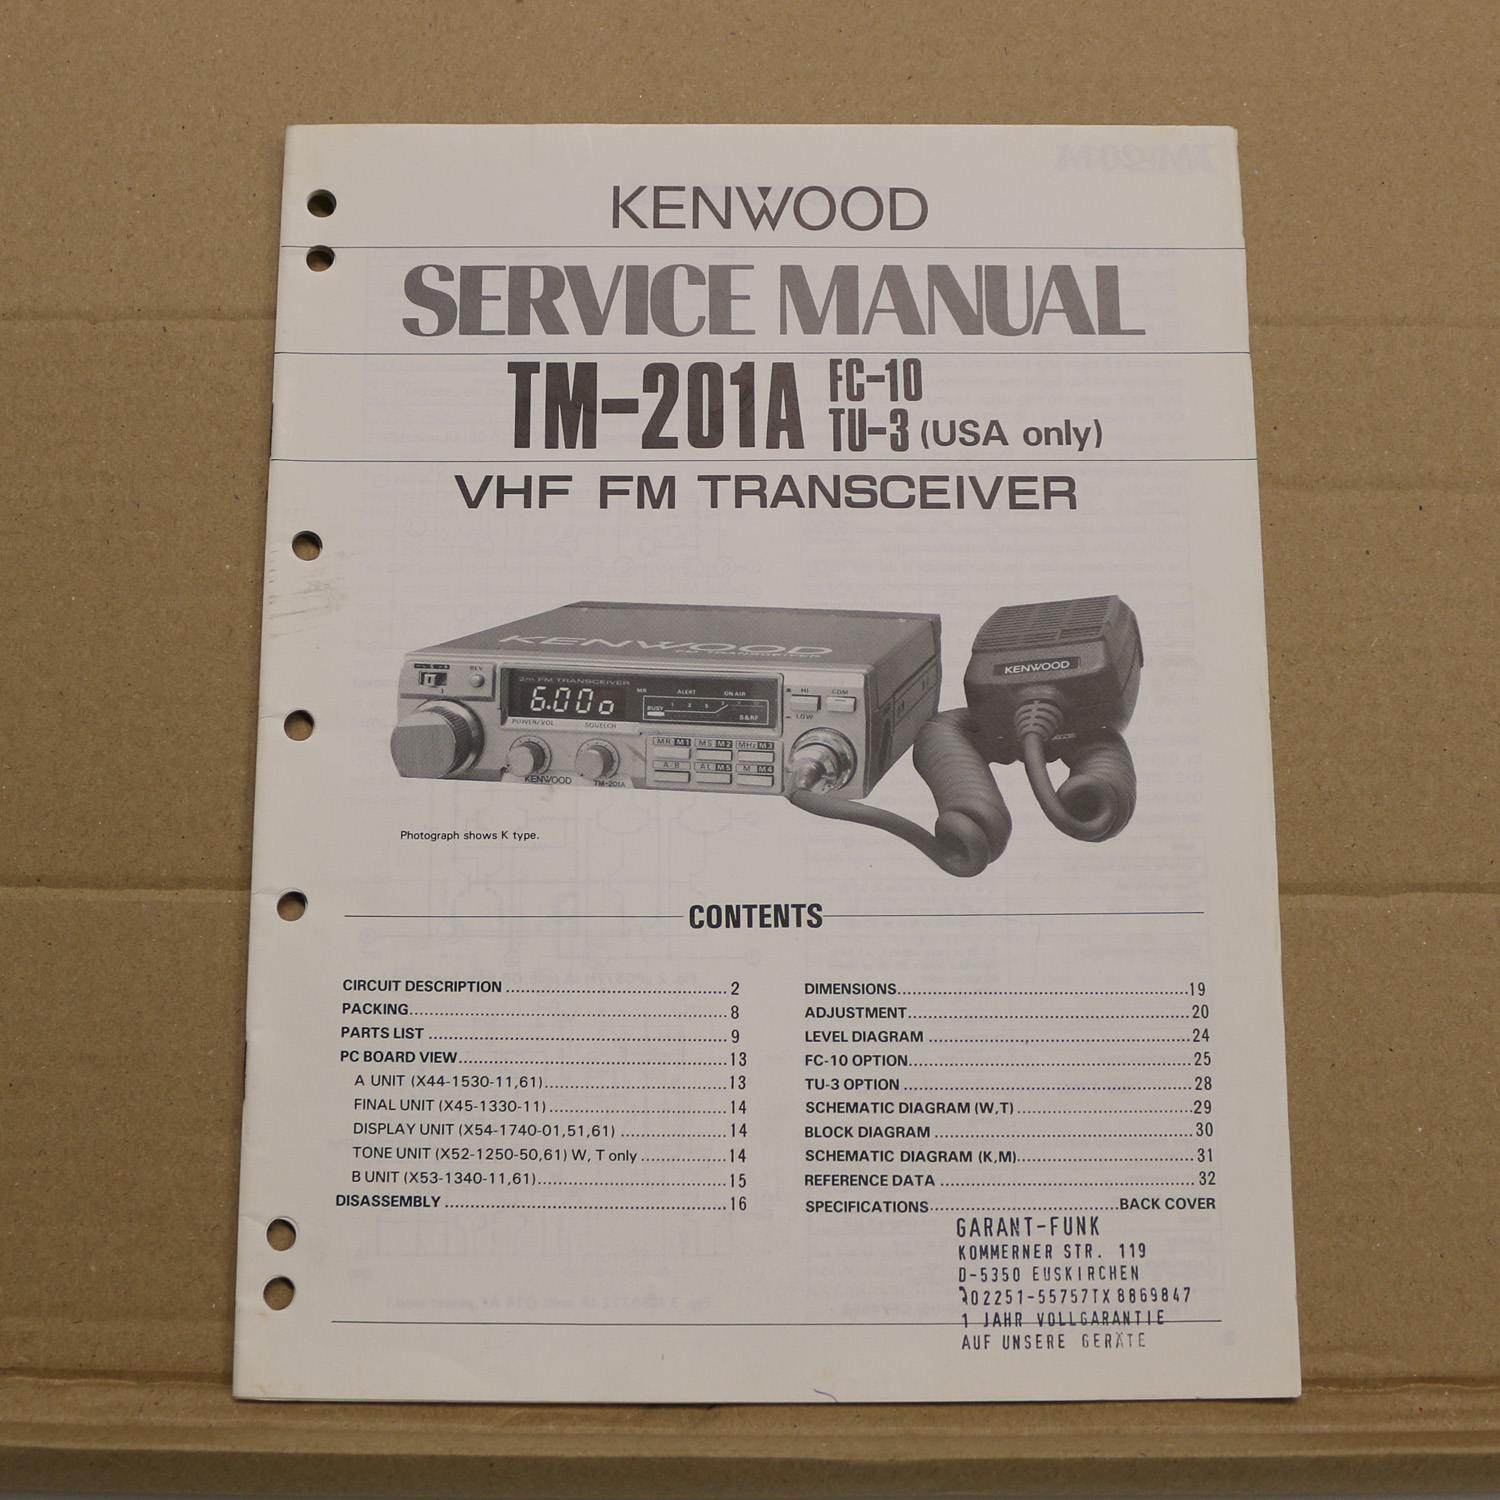 Kenwood TM-201A Service Manual